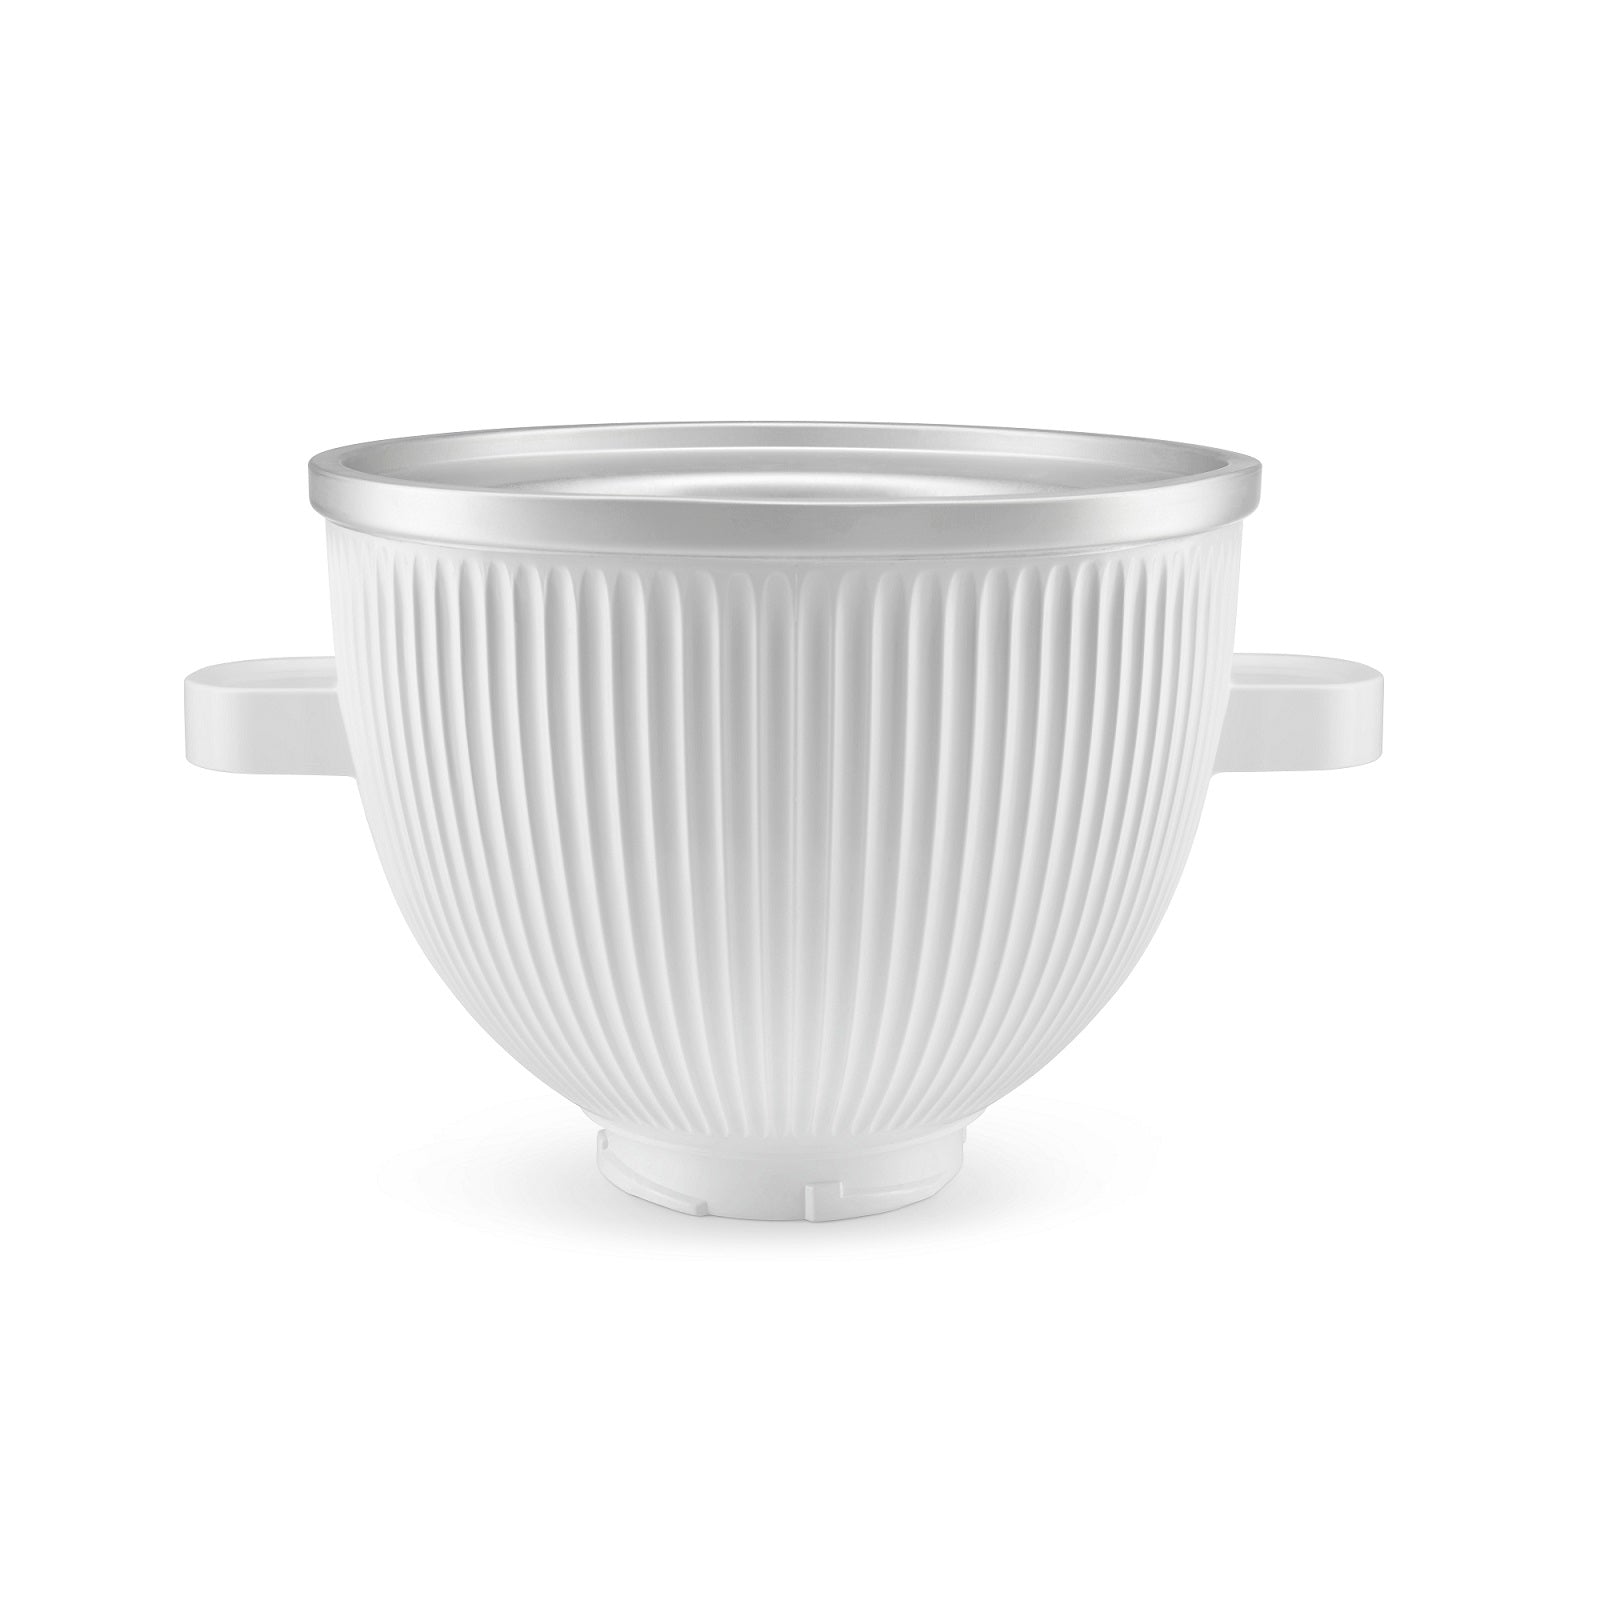 New KitchenAid Ice Cream Bowl Attachment for Stand Mixer 5KSMICM